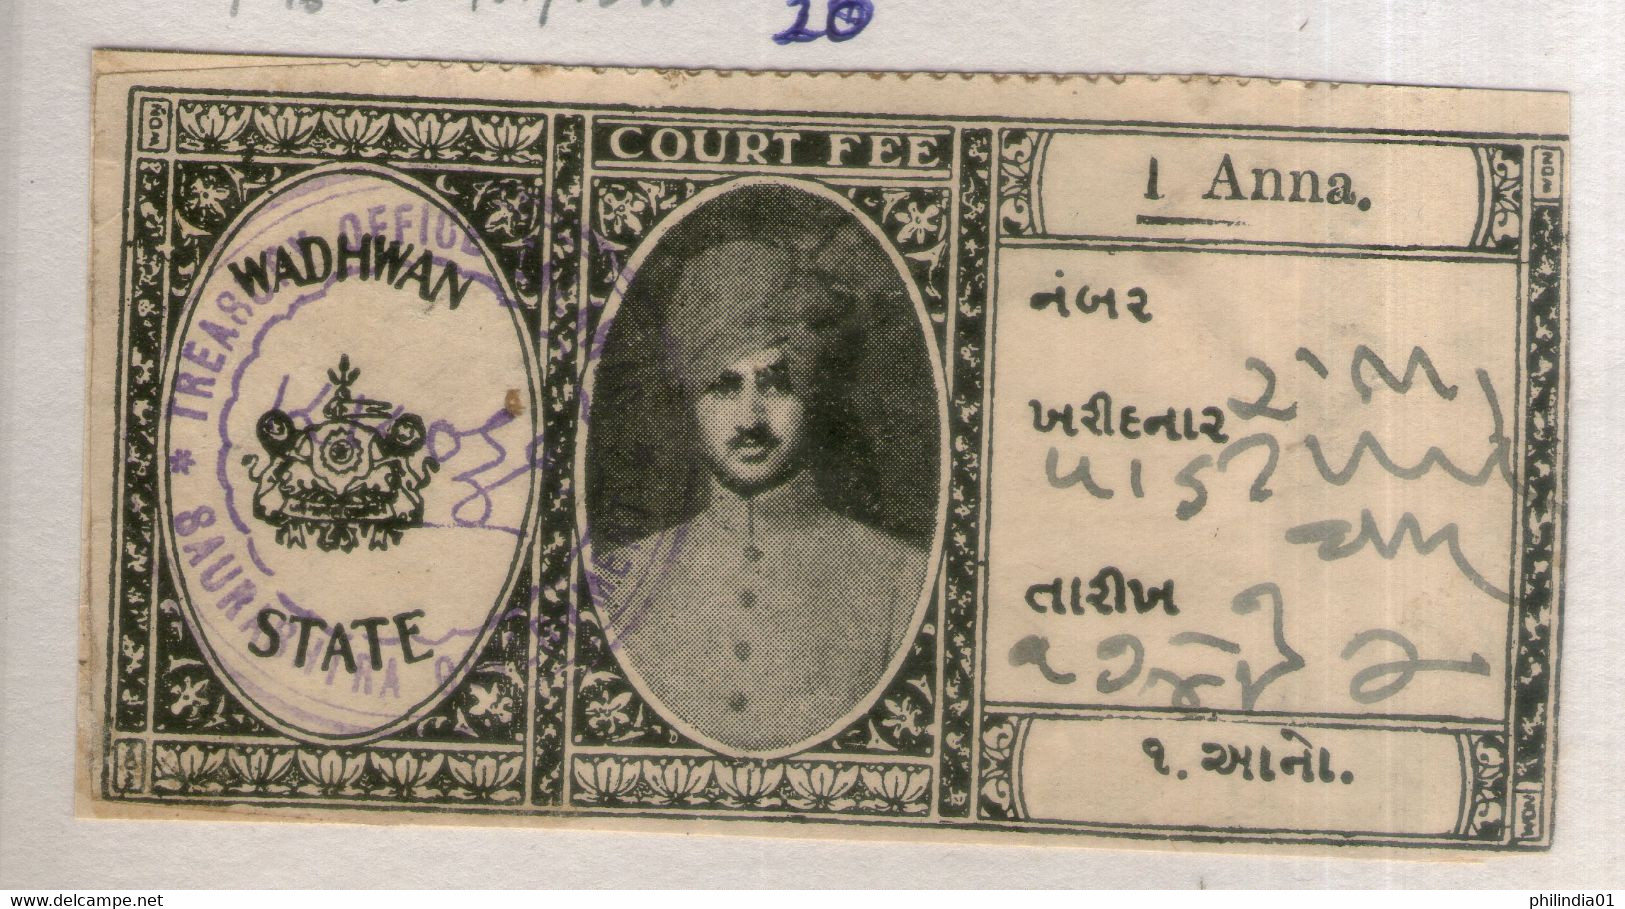 India Fiscal Wadhwan State 1An King Type 16 KM 161 Court Fee Stamp # 1971 - Wadhwan